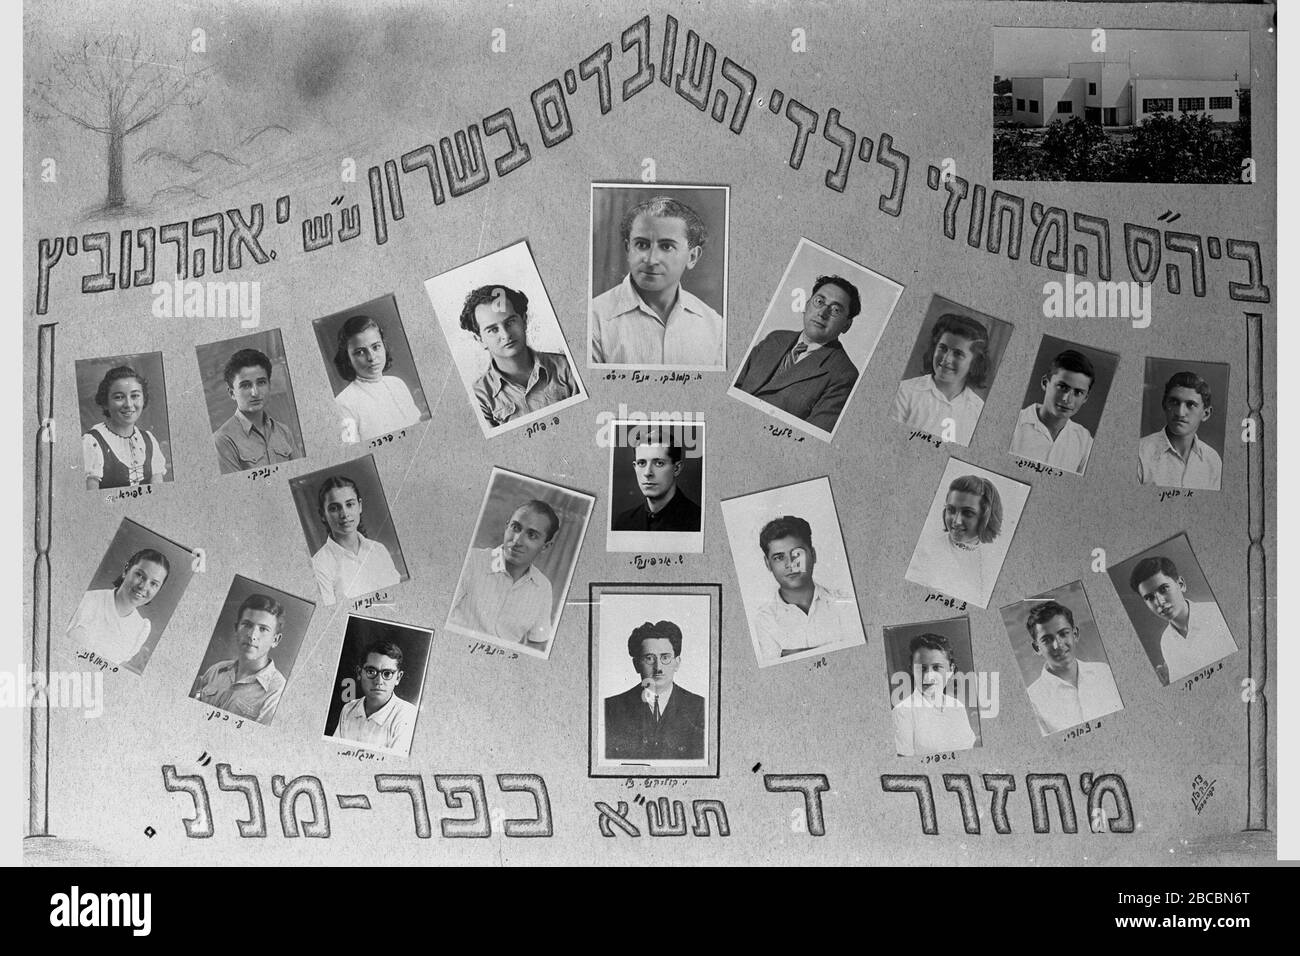 English 1941 Class Photo Of Students From The Sharon Workers School In Kfar Malal Named After Y Aharonovitz U I U O N I C U U U O I O E O I I U O I N O U O U I O I I E I O U